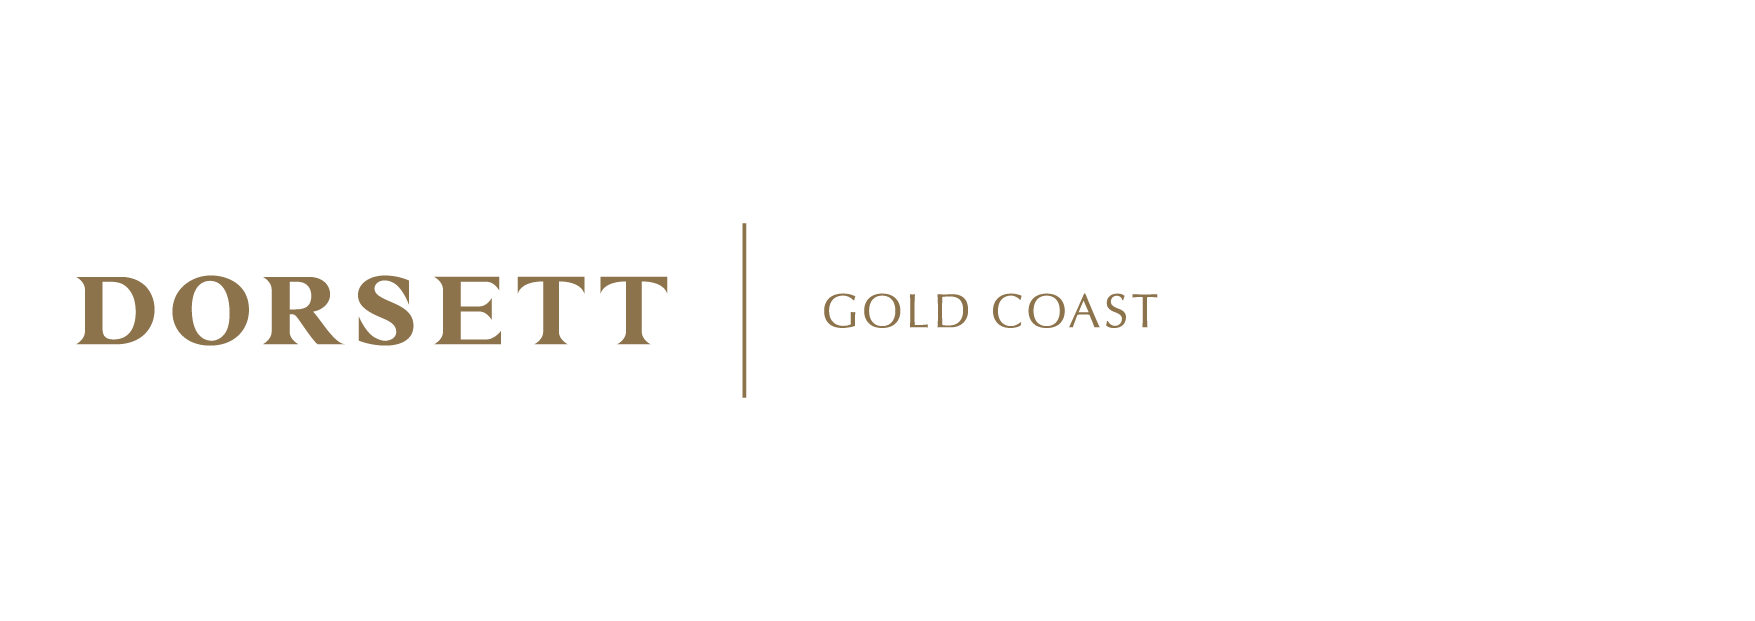 Dorsett Gold Coast